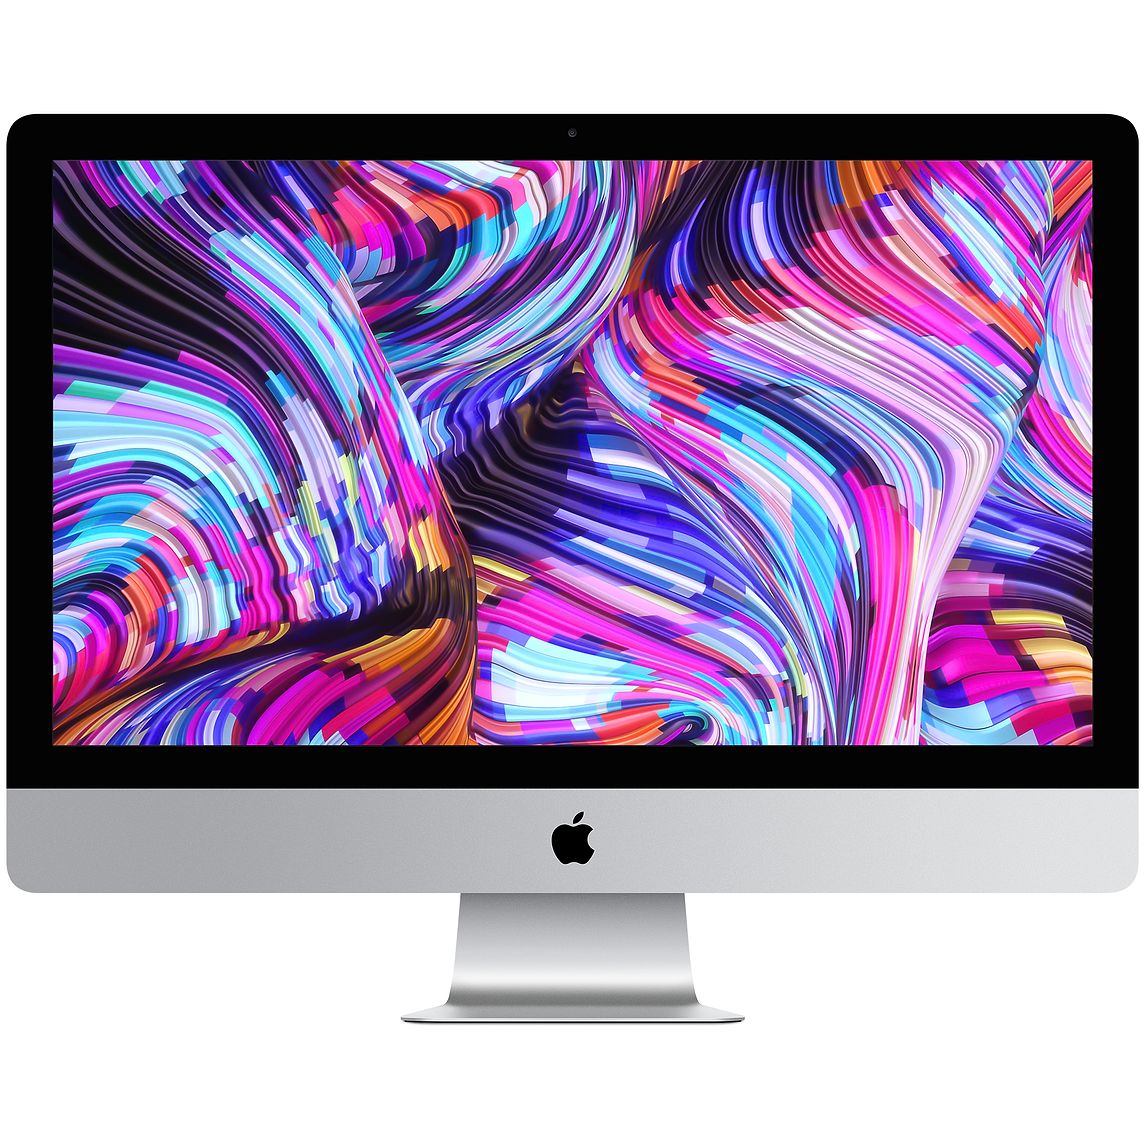 iMac 21.5-Inch Core i7 3.3GHz Retina 4K, Late 2015 -MK452 option BTOCTO - iMac16,2 - A1418 - 2833